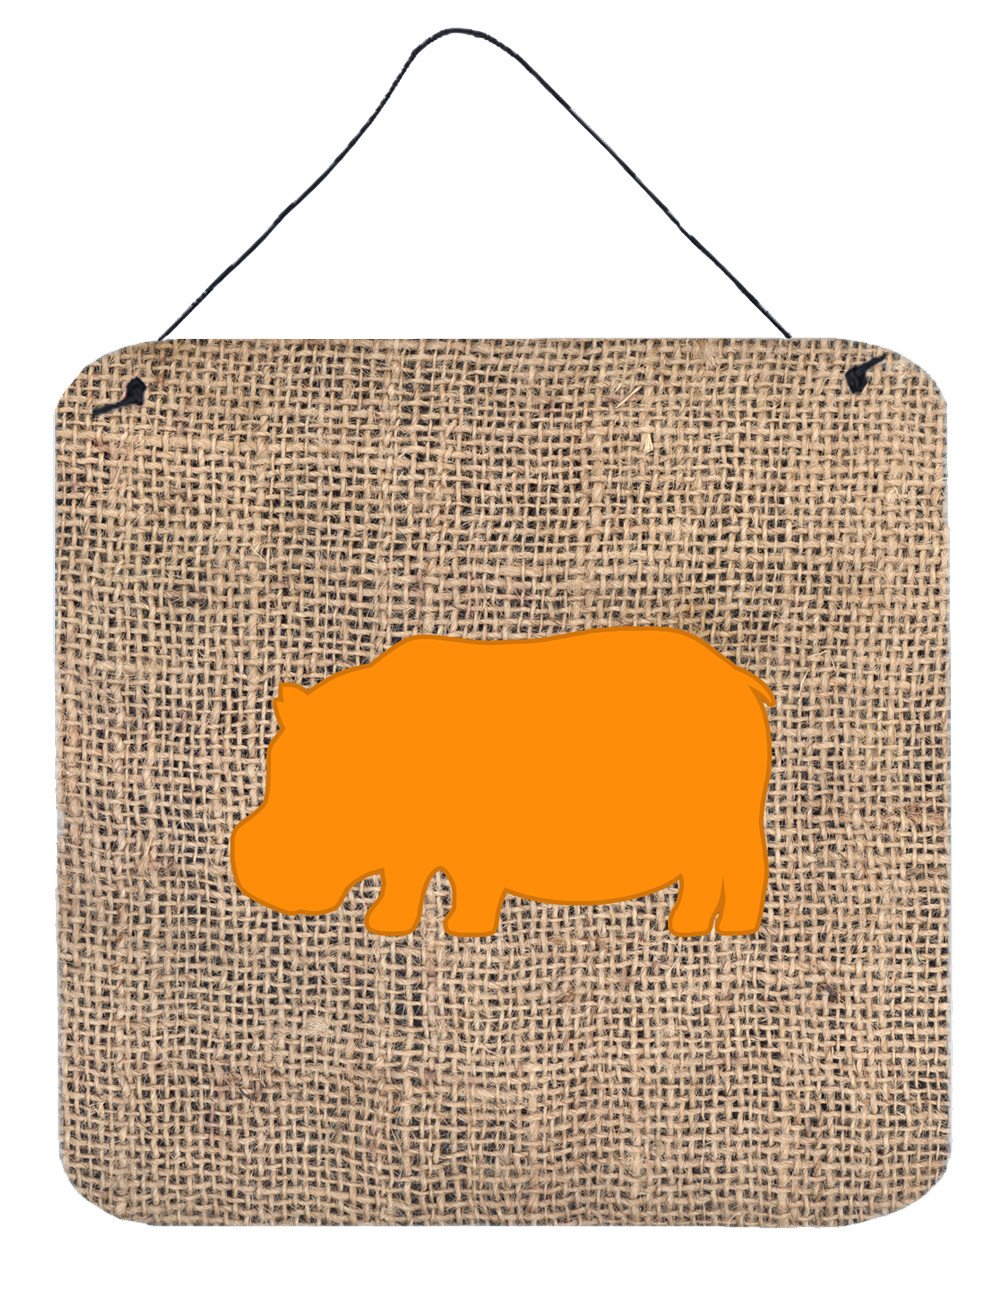 Hippopotamus Burlap and Orange Wall or Door Hanging Prints BB1130 by Caroline&#39;s Treasures